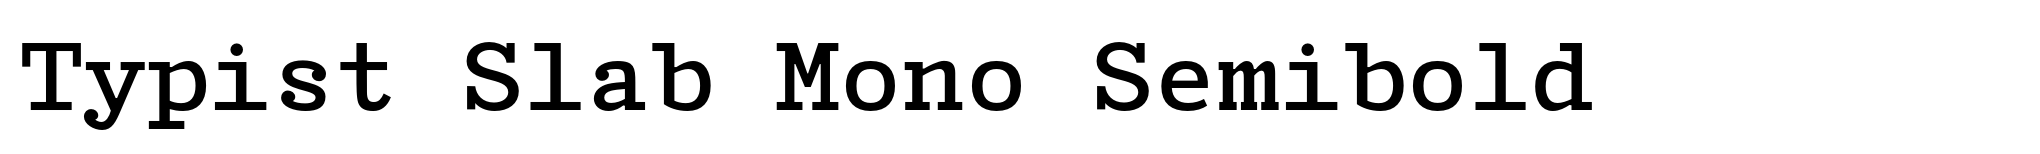 Typist Slab Mono Semibold image